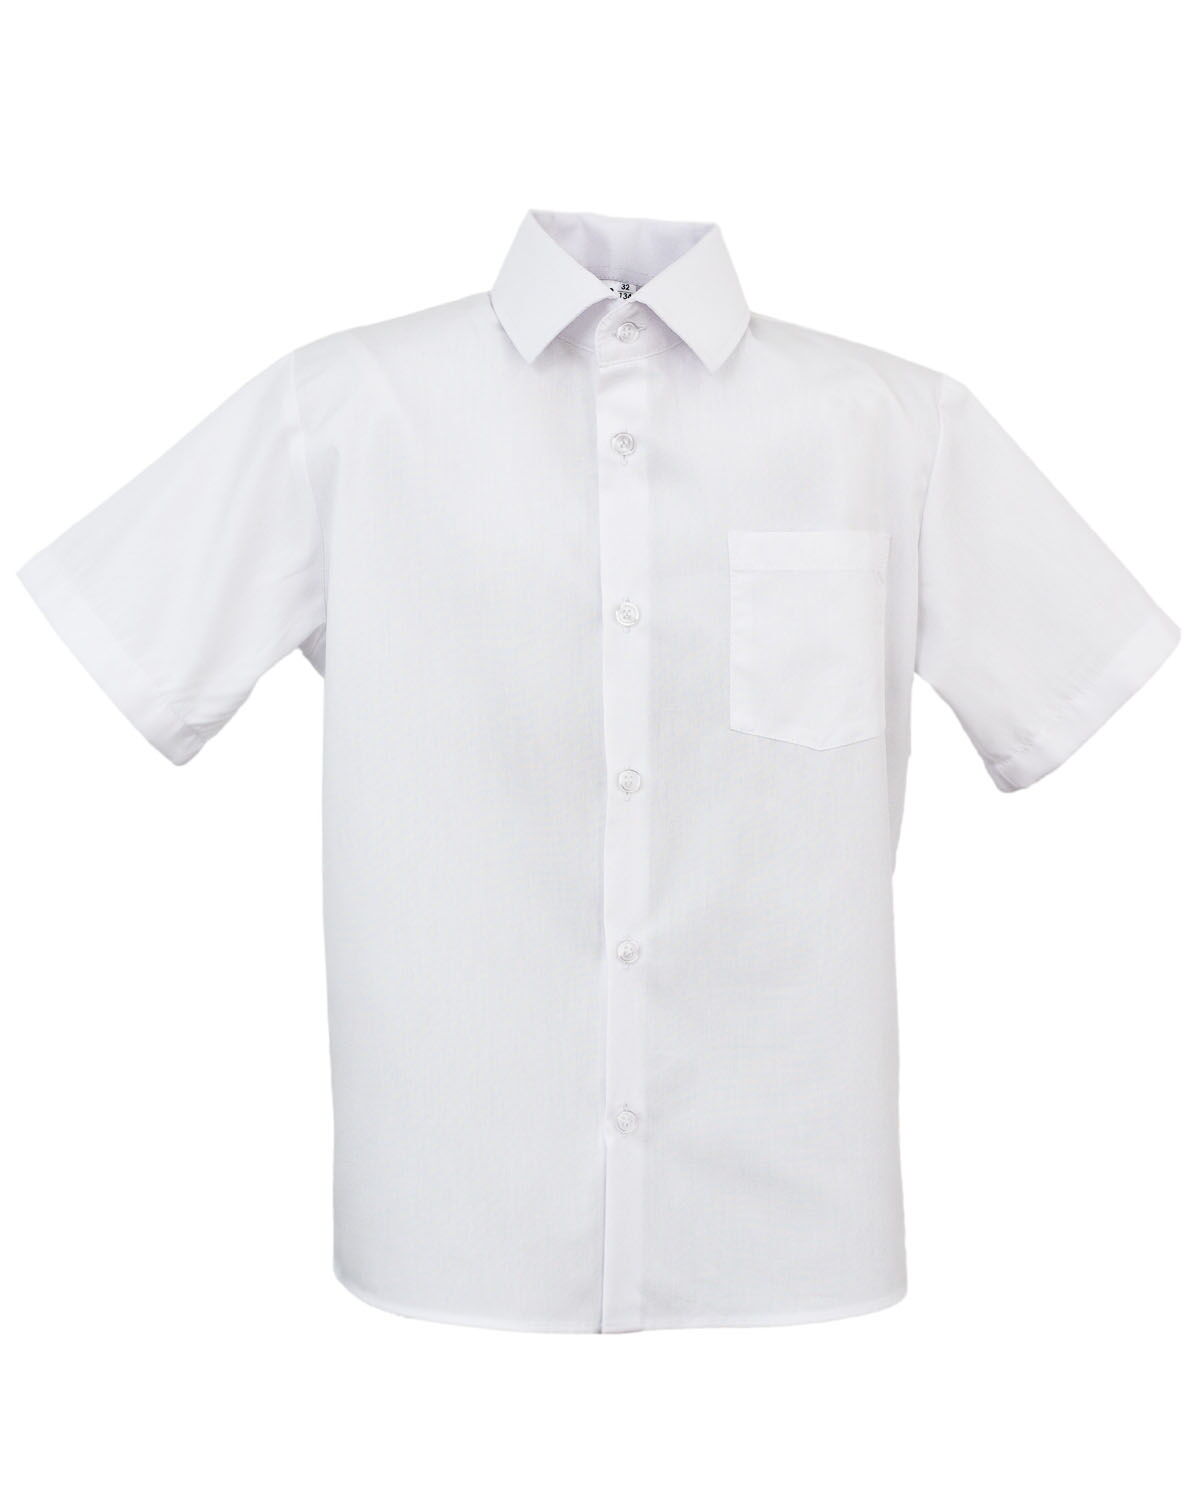 Рубашка с коротким рукавом для мальчика Bebepa белая 1105-136 - цена